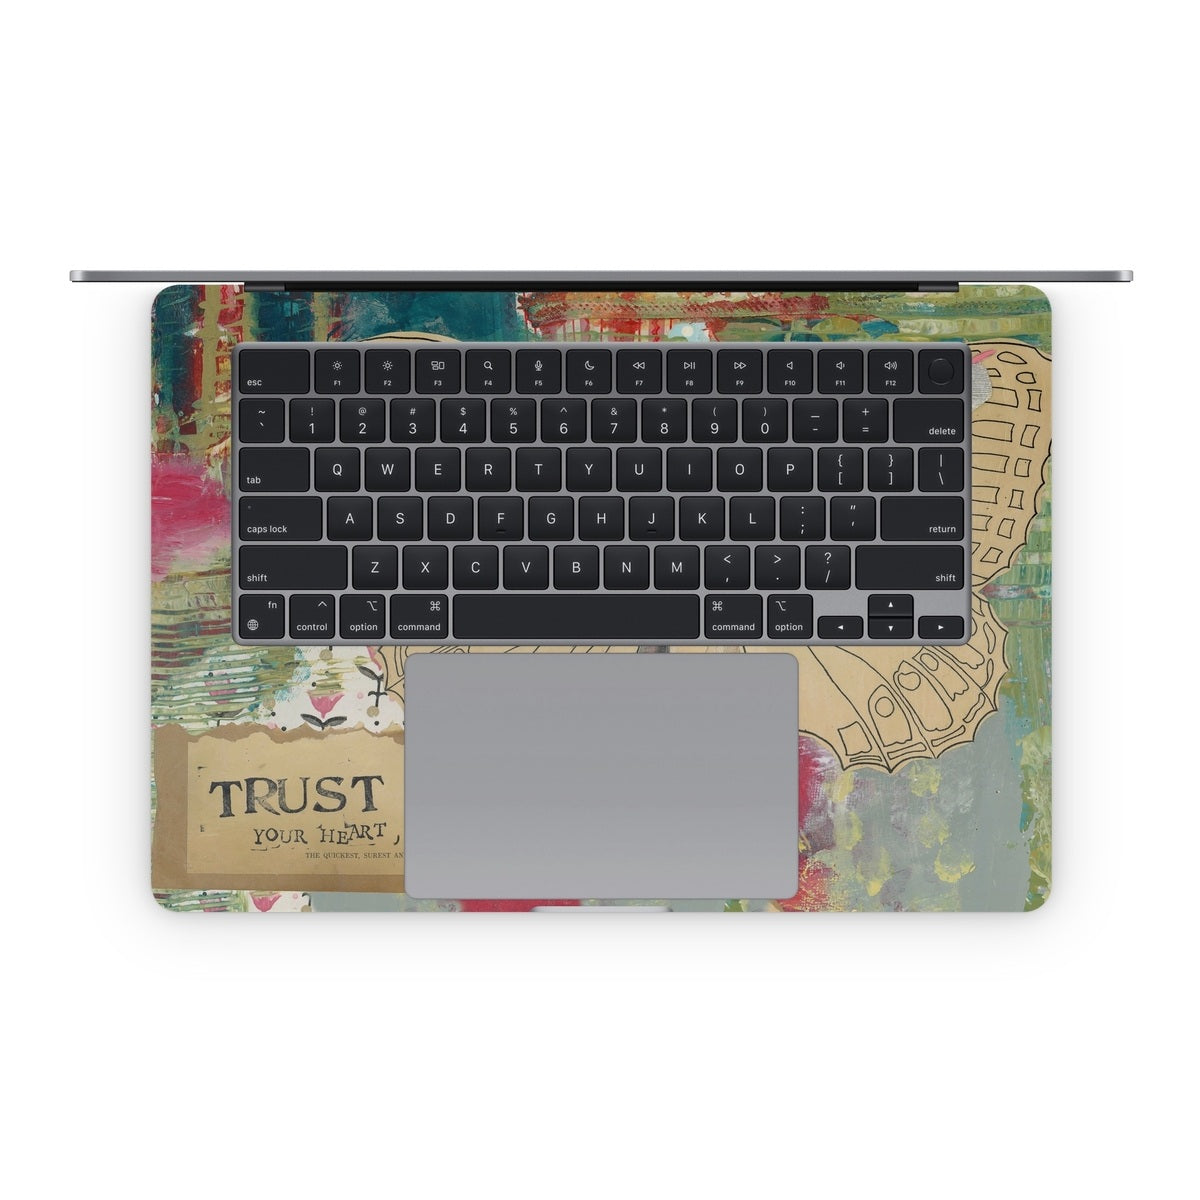 Trust Your Dreams - Apple MacBook Skin